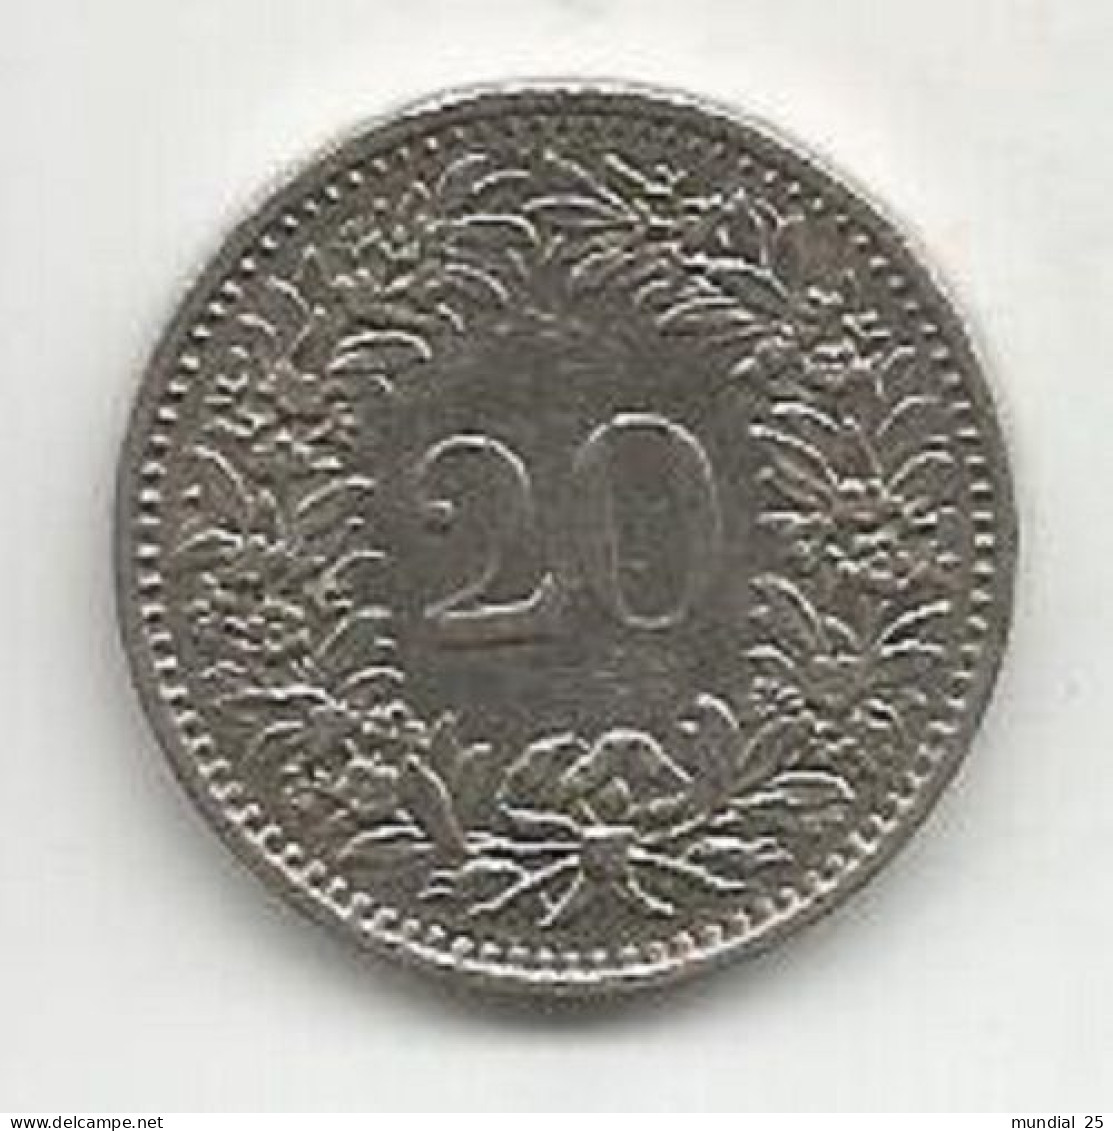 SWITZERLAND 20 RAPPEN 1976 - 20 Rappen